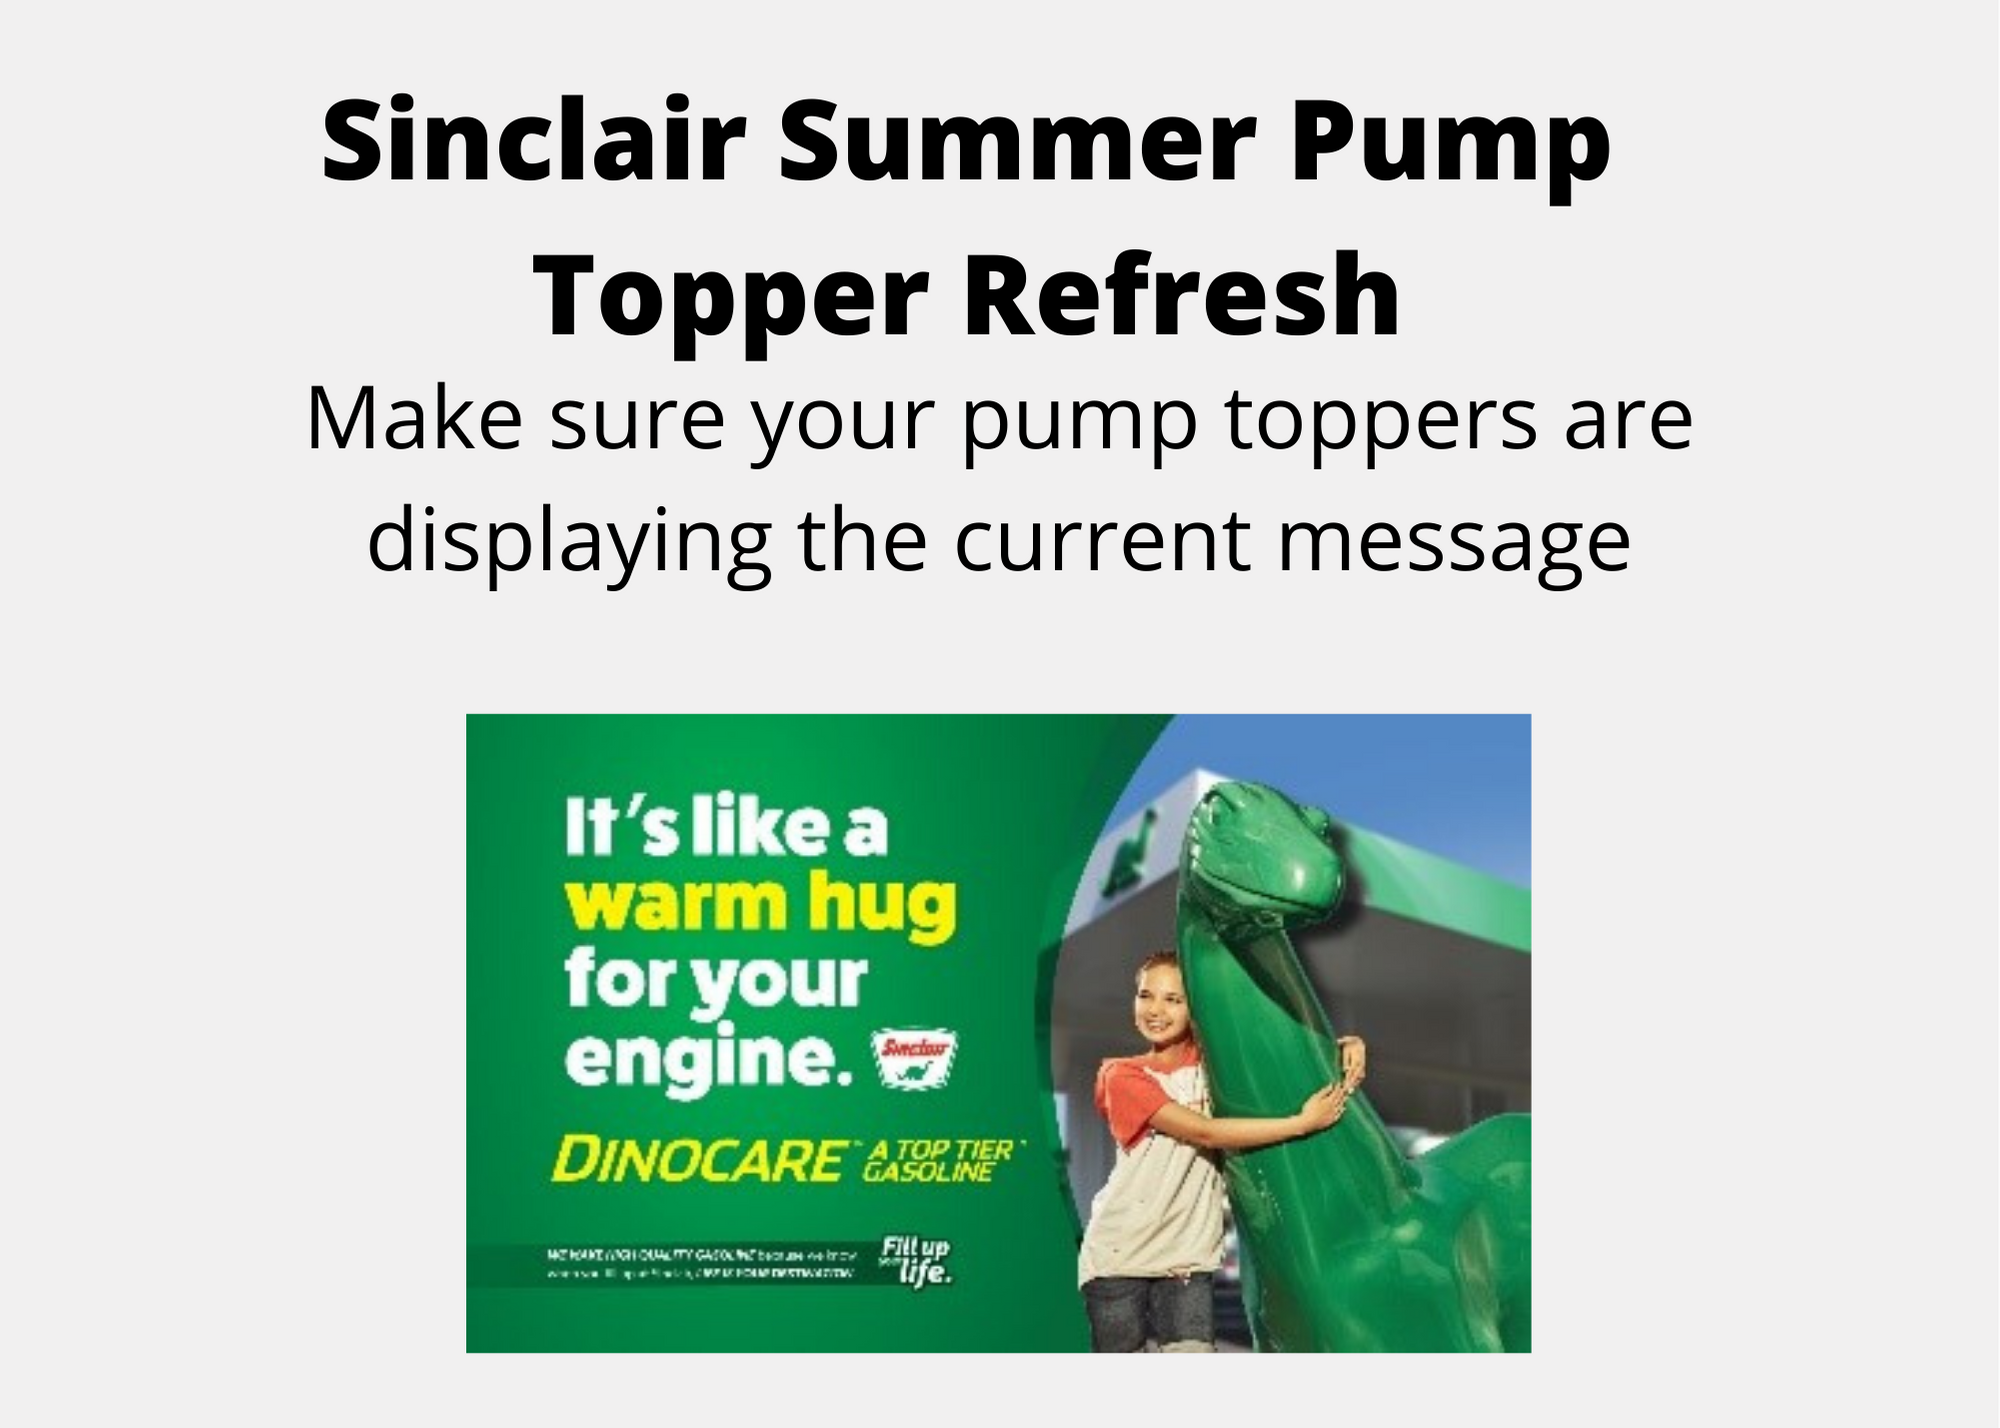 Pump topper